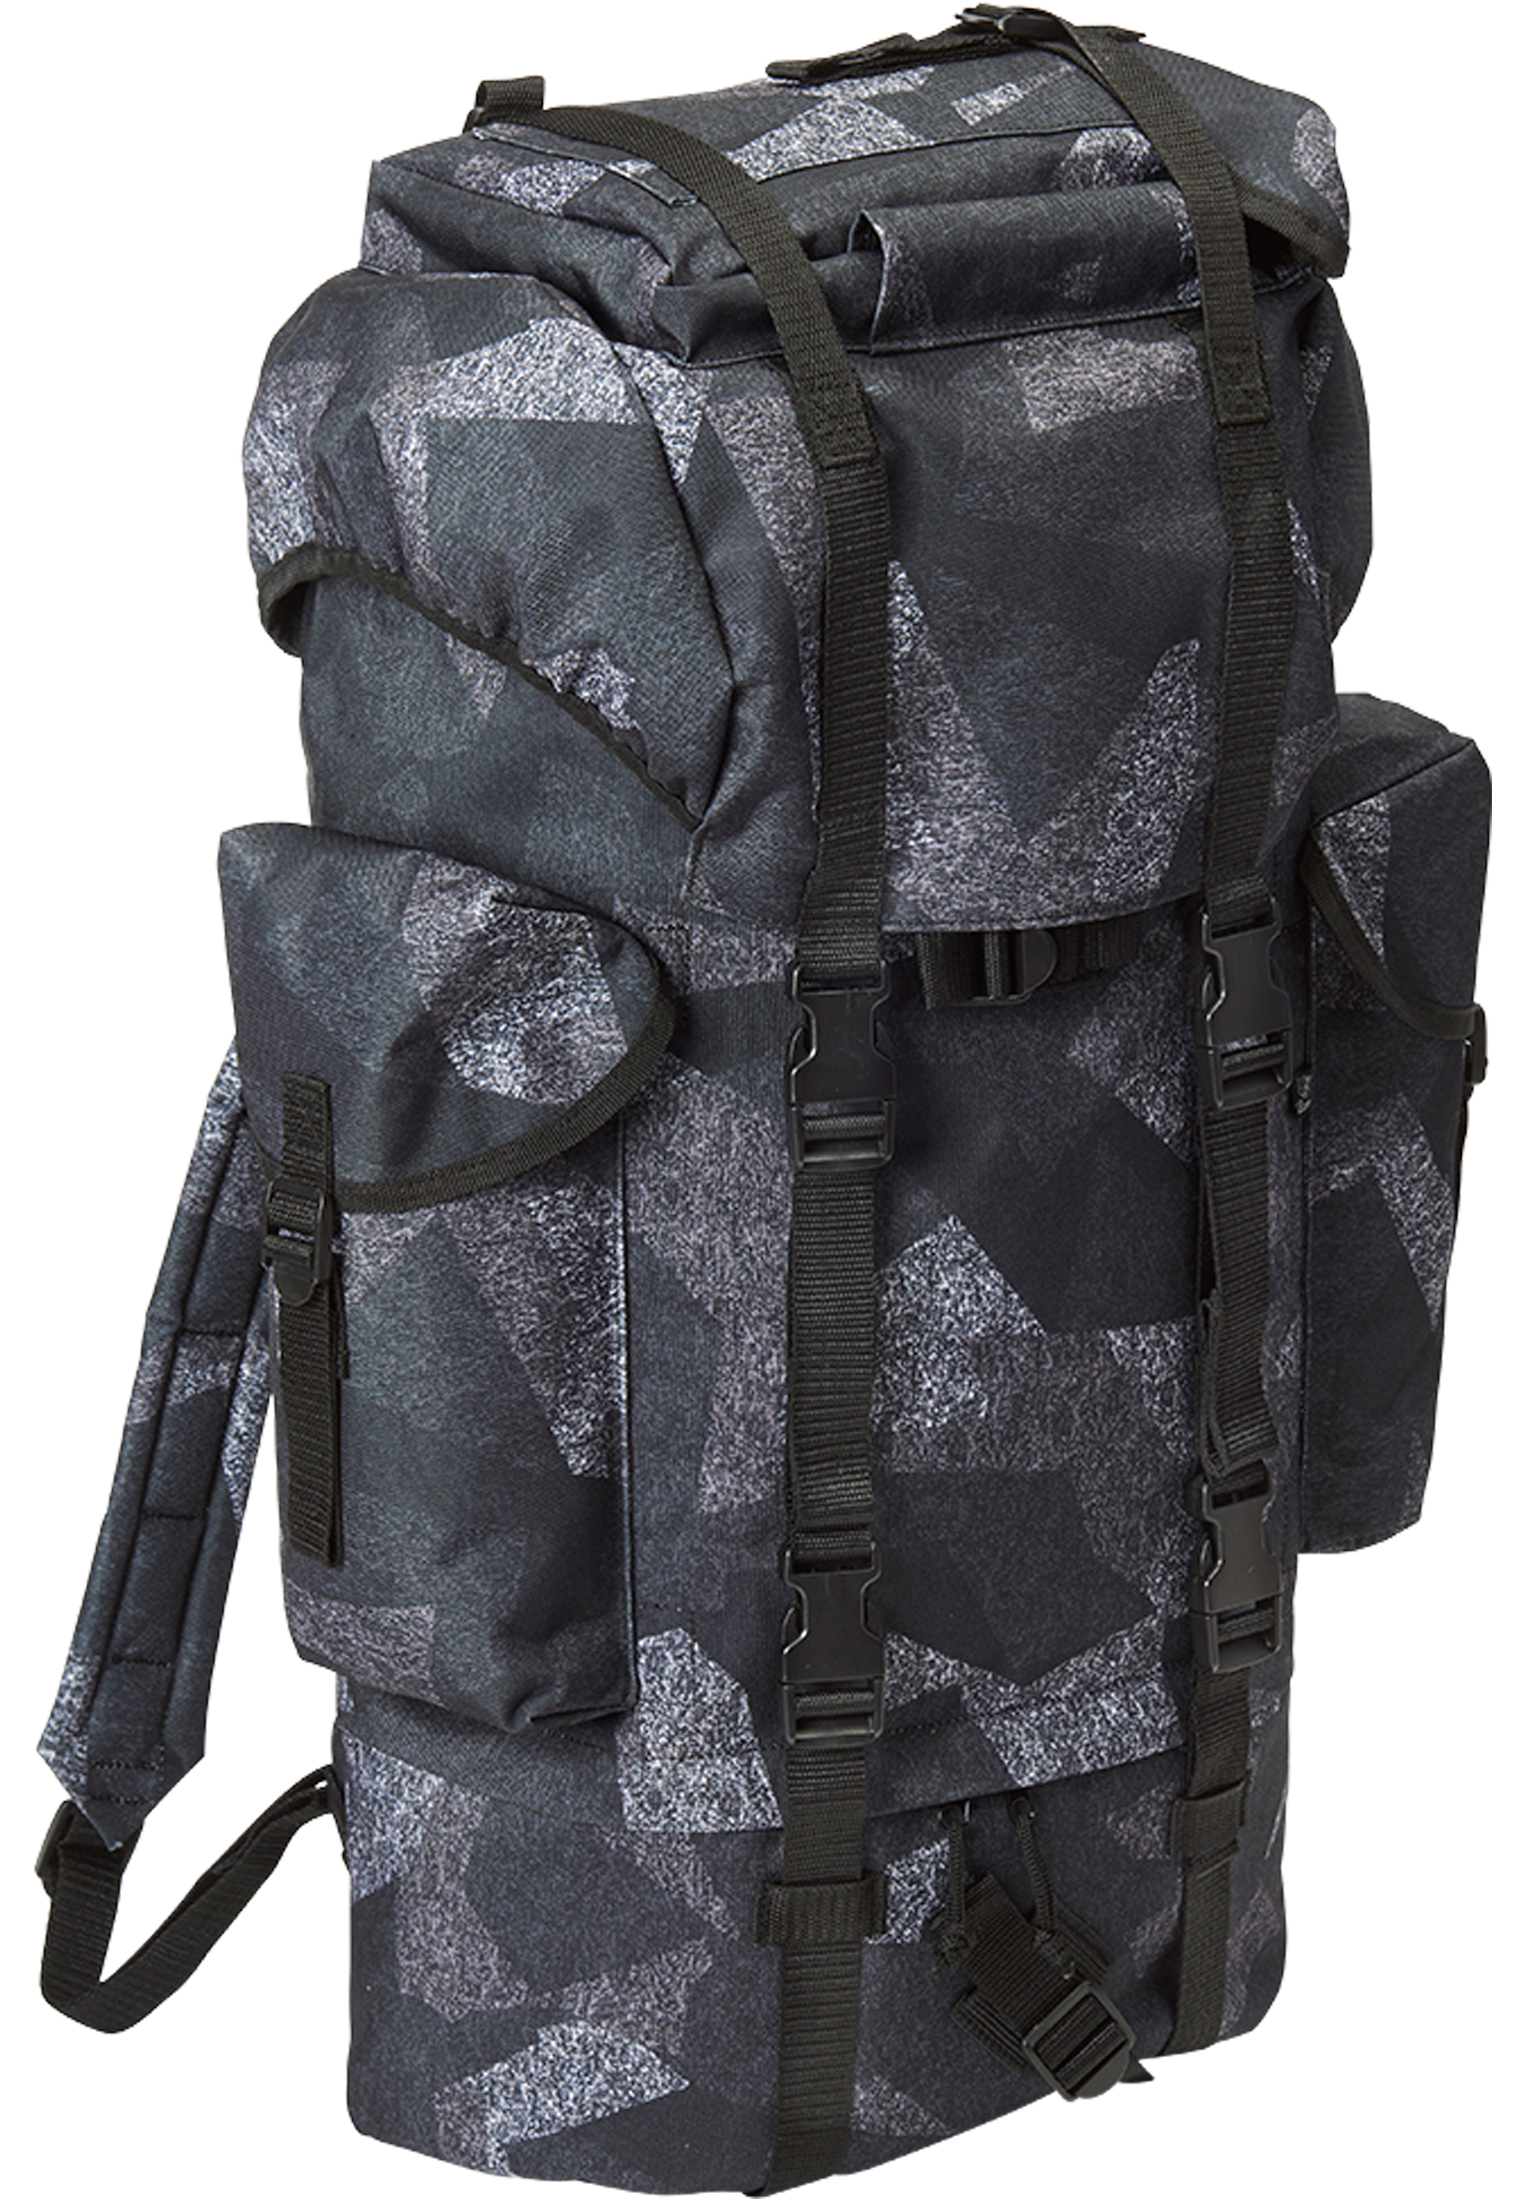 Taschen Nylon Military Backpack in Farbe digital night camo